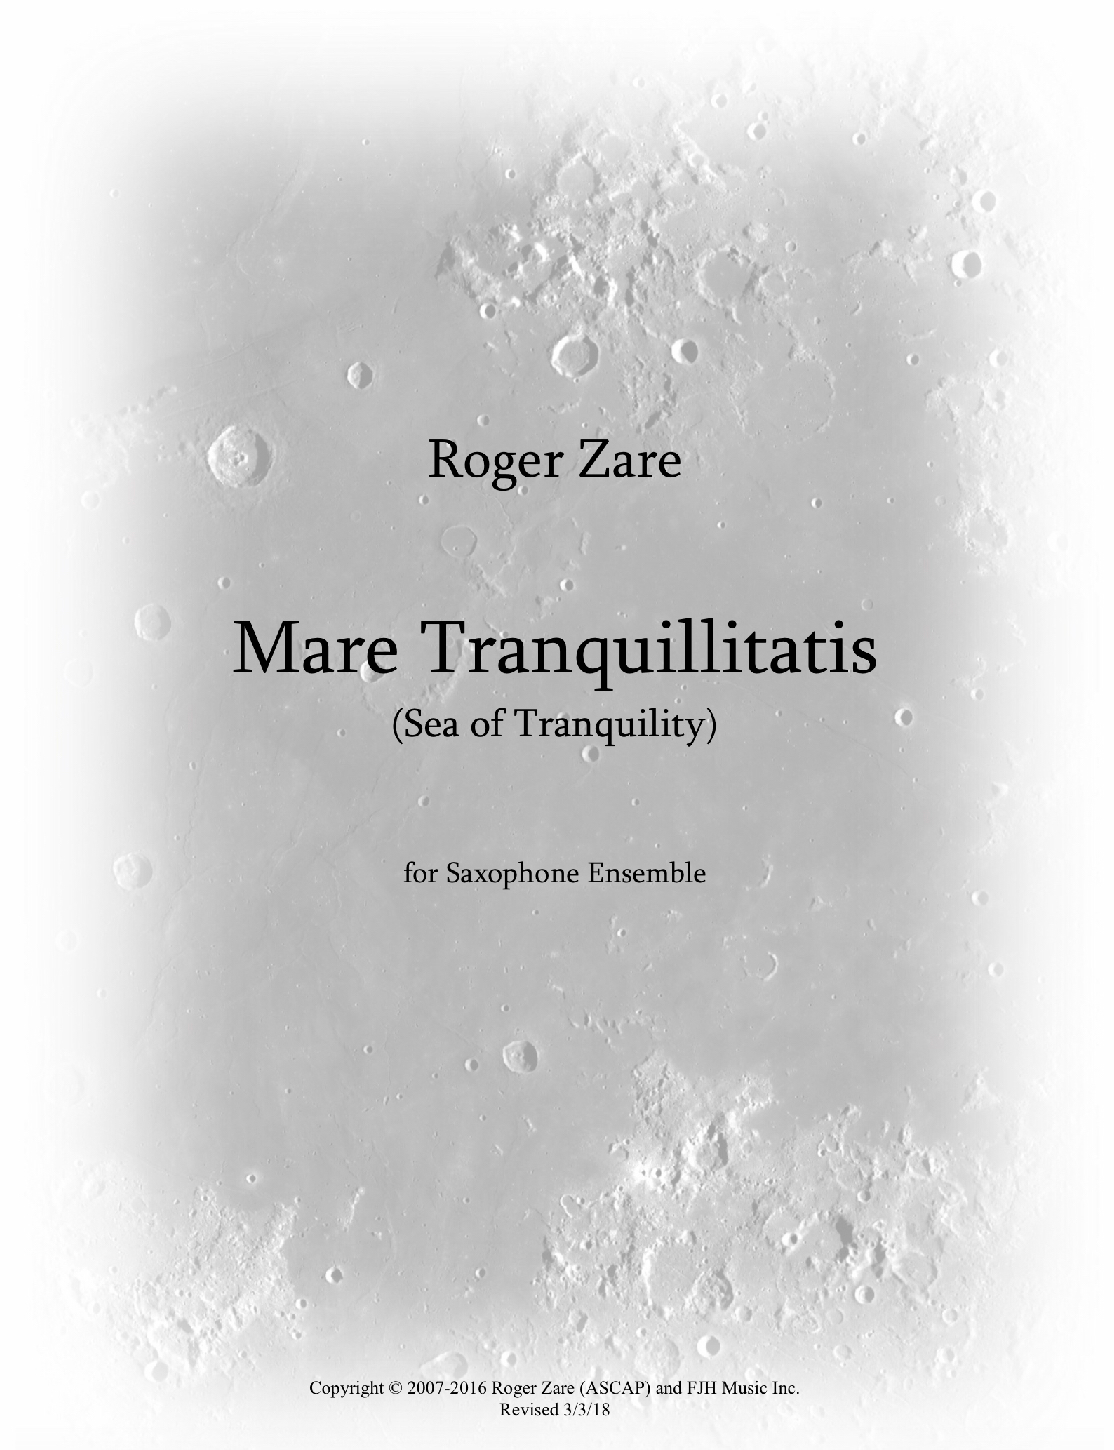 Mare Tranquillitatis (Saxophone Ensemble Version) by Roger Zare